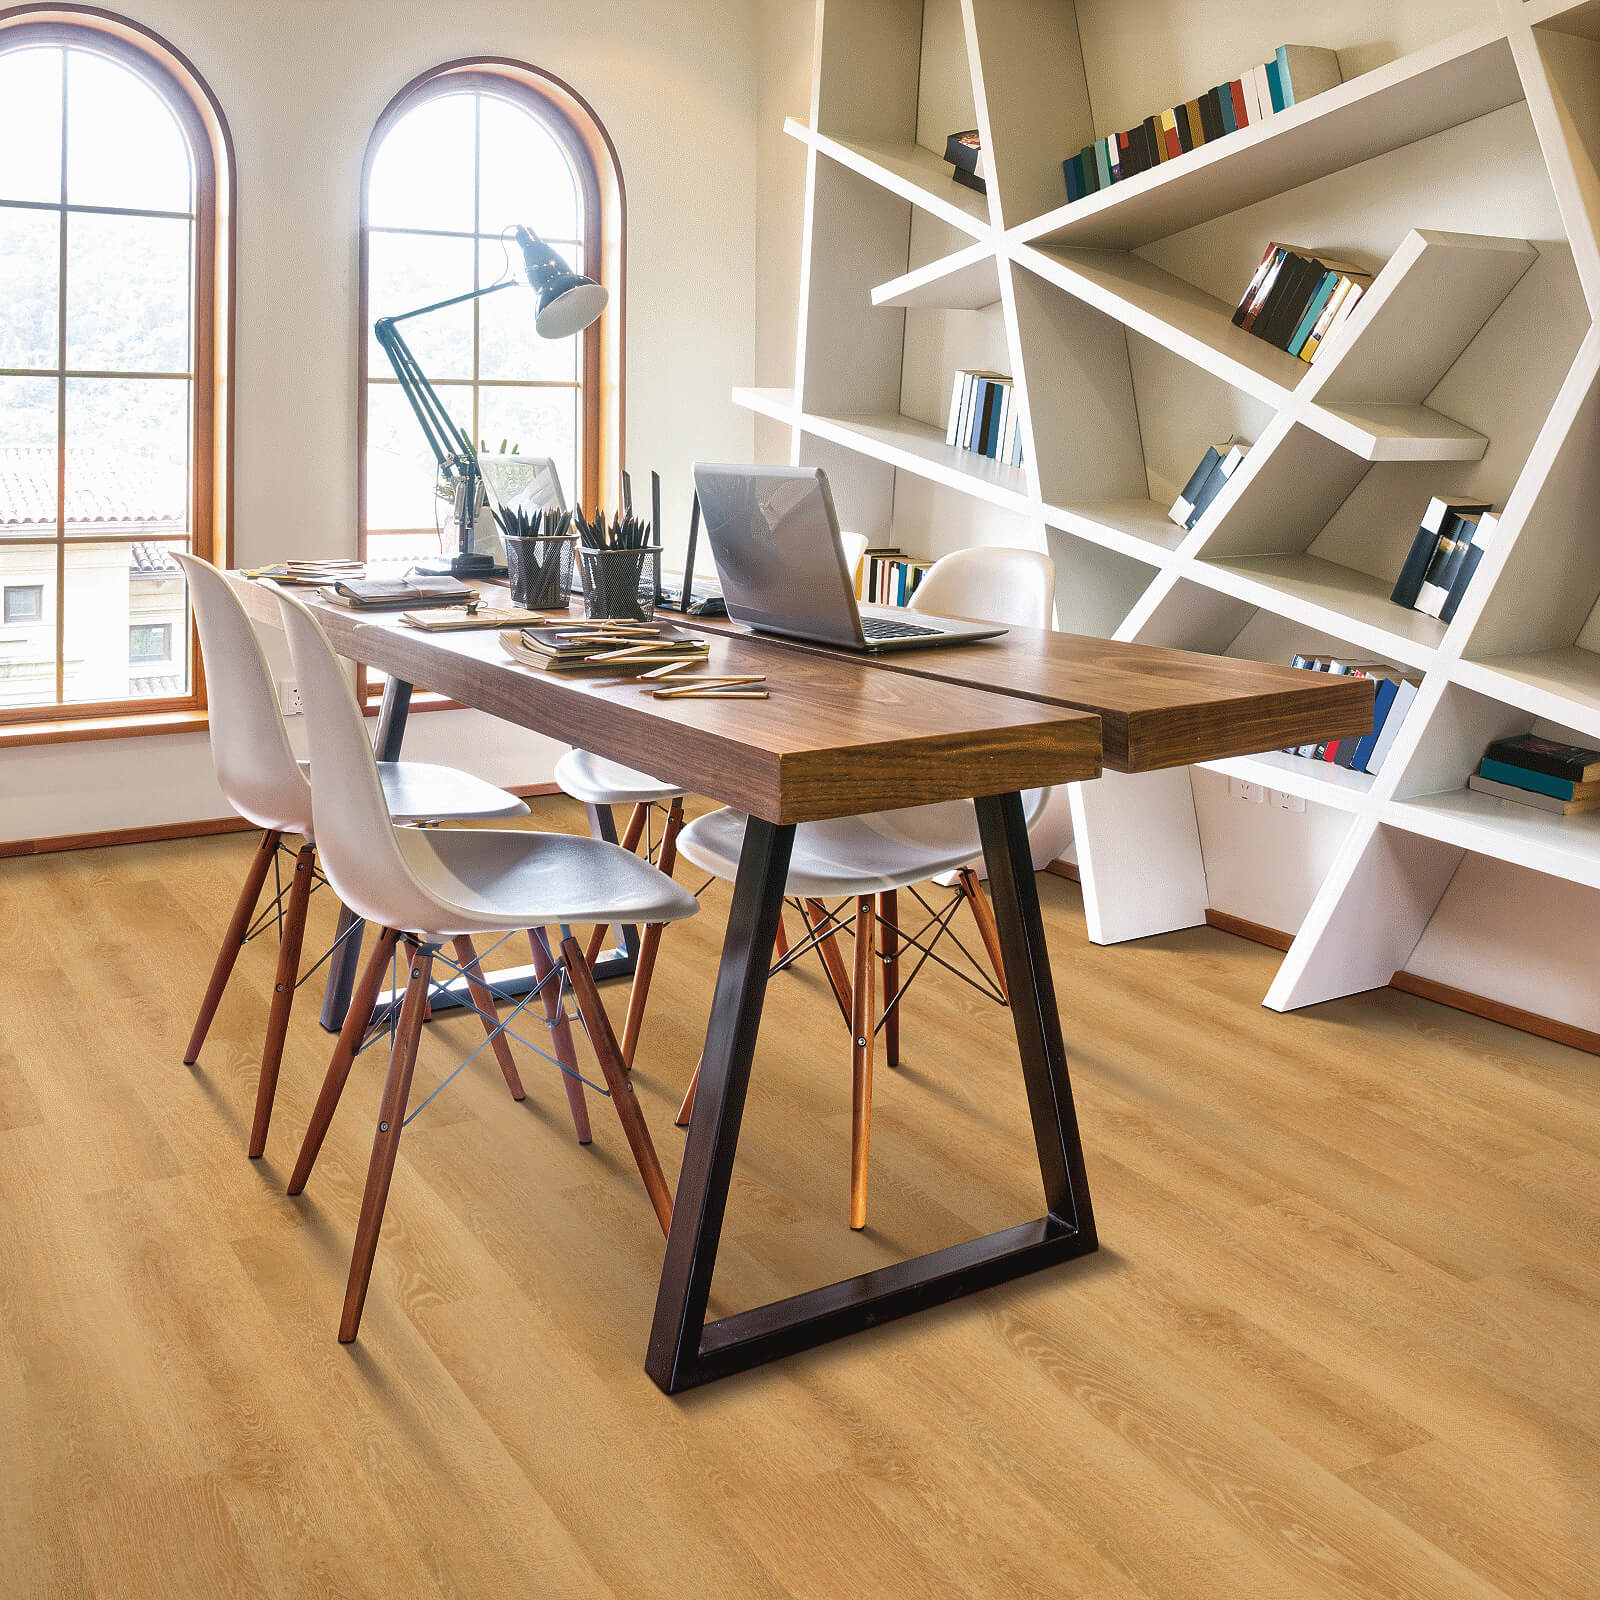 Vinyl flooring for study room | CarpetsPlus Of Wisconsin